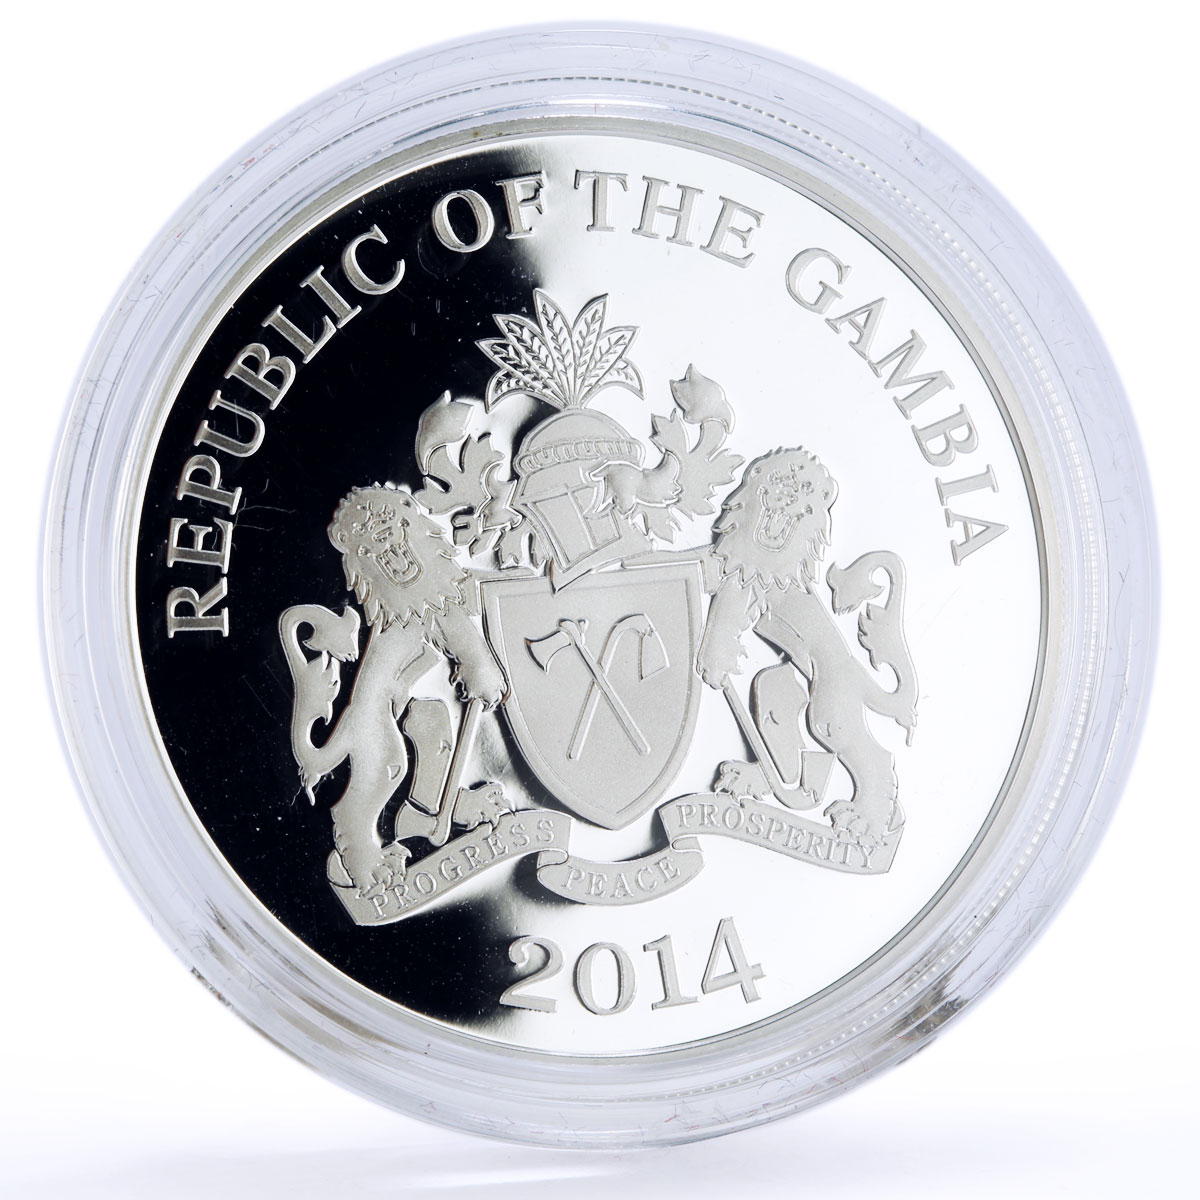 Gambia 200 dalasis Seafaring Flor de La Mar Ship Clipper proof silver coin 2014